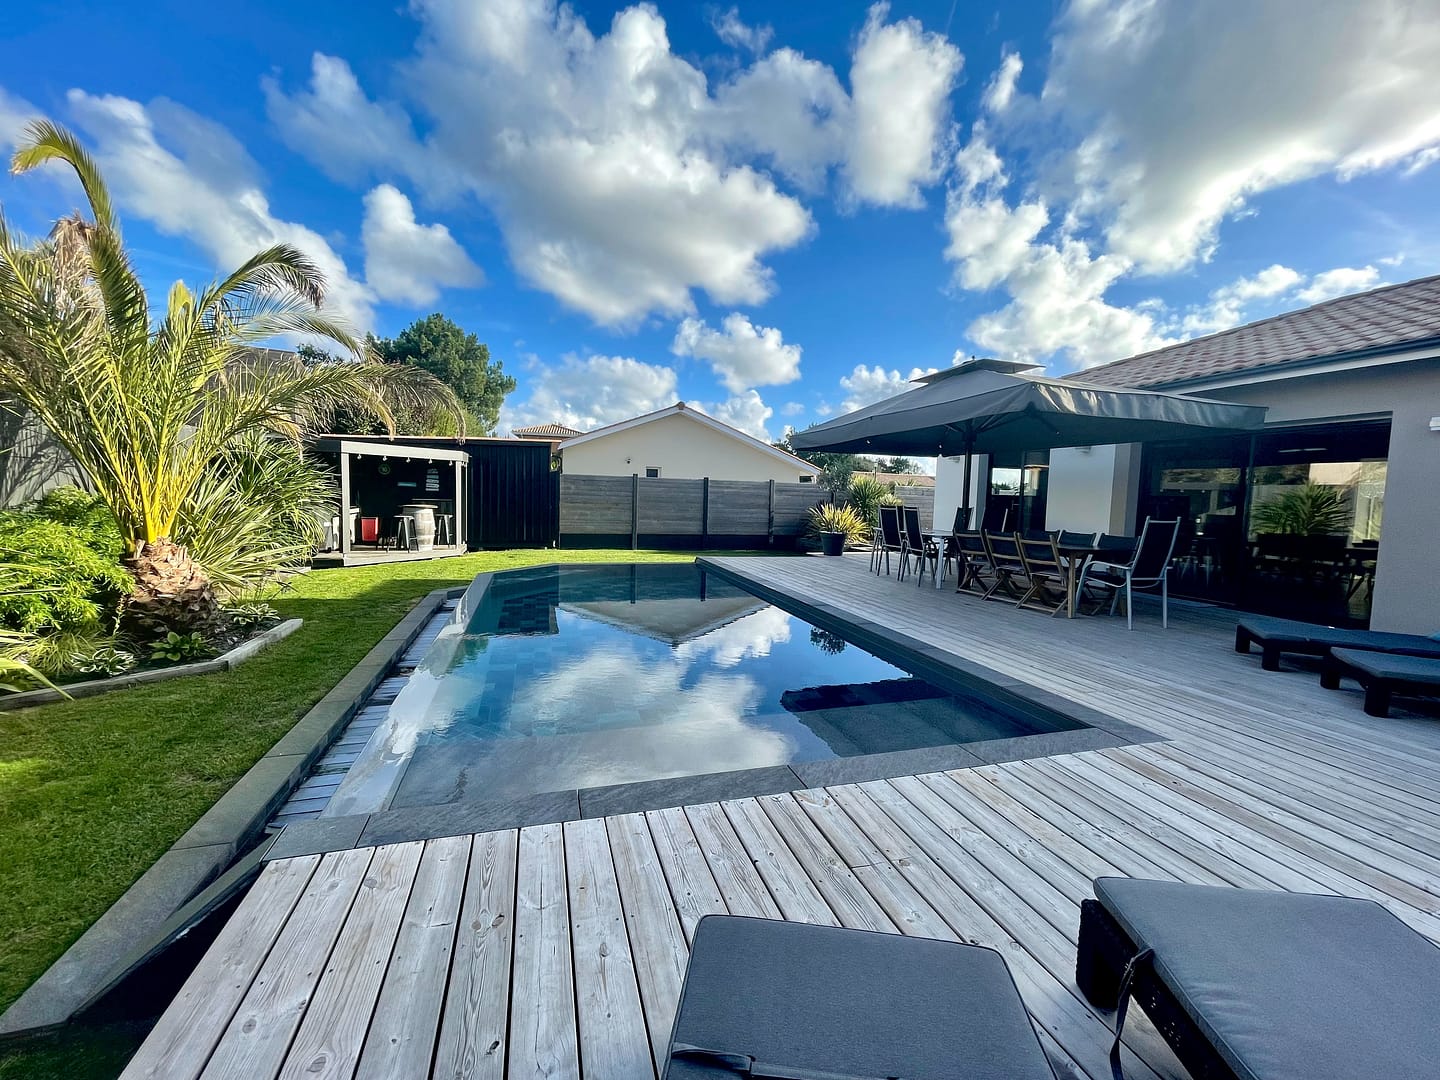 Maison moderne avec piscine, jardin exotique et terrasse